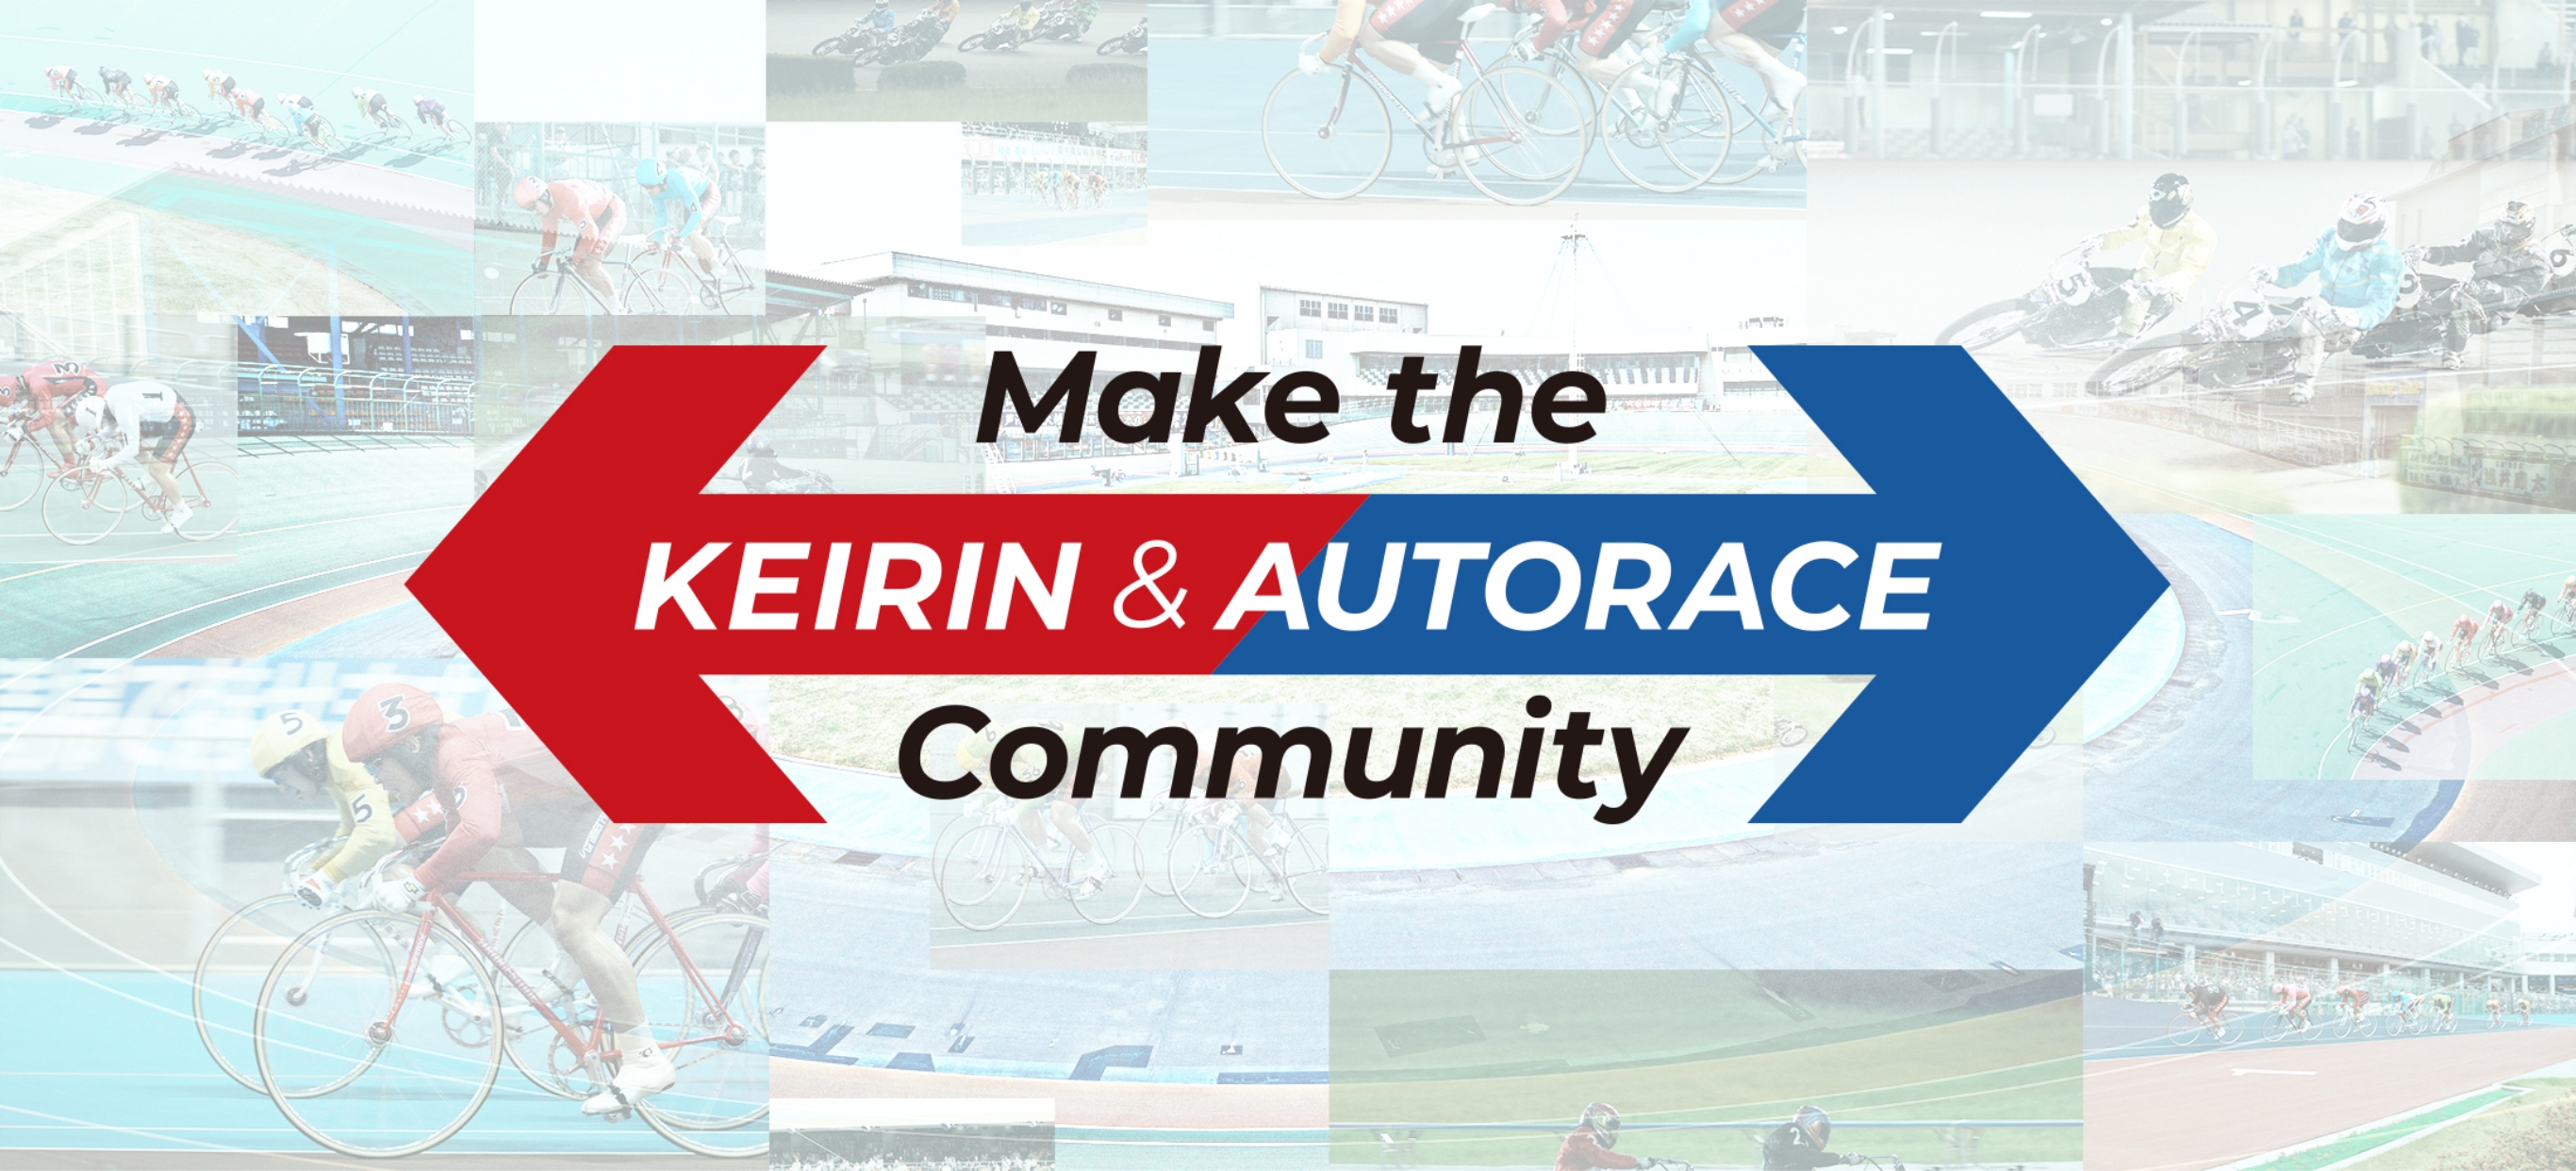 Make the KEIRIN & AUTORACE Community